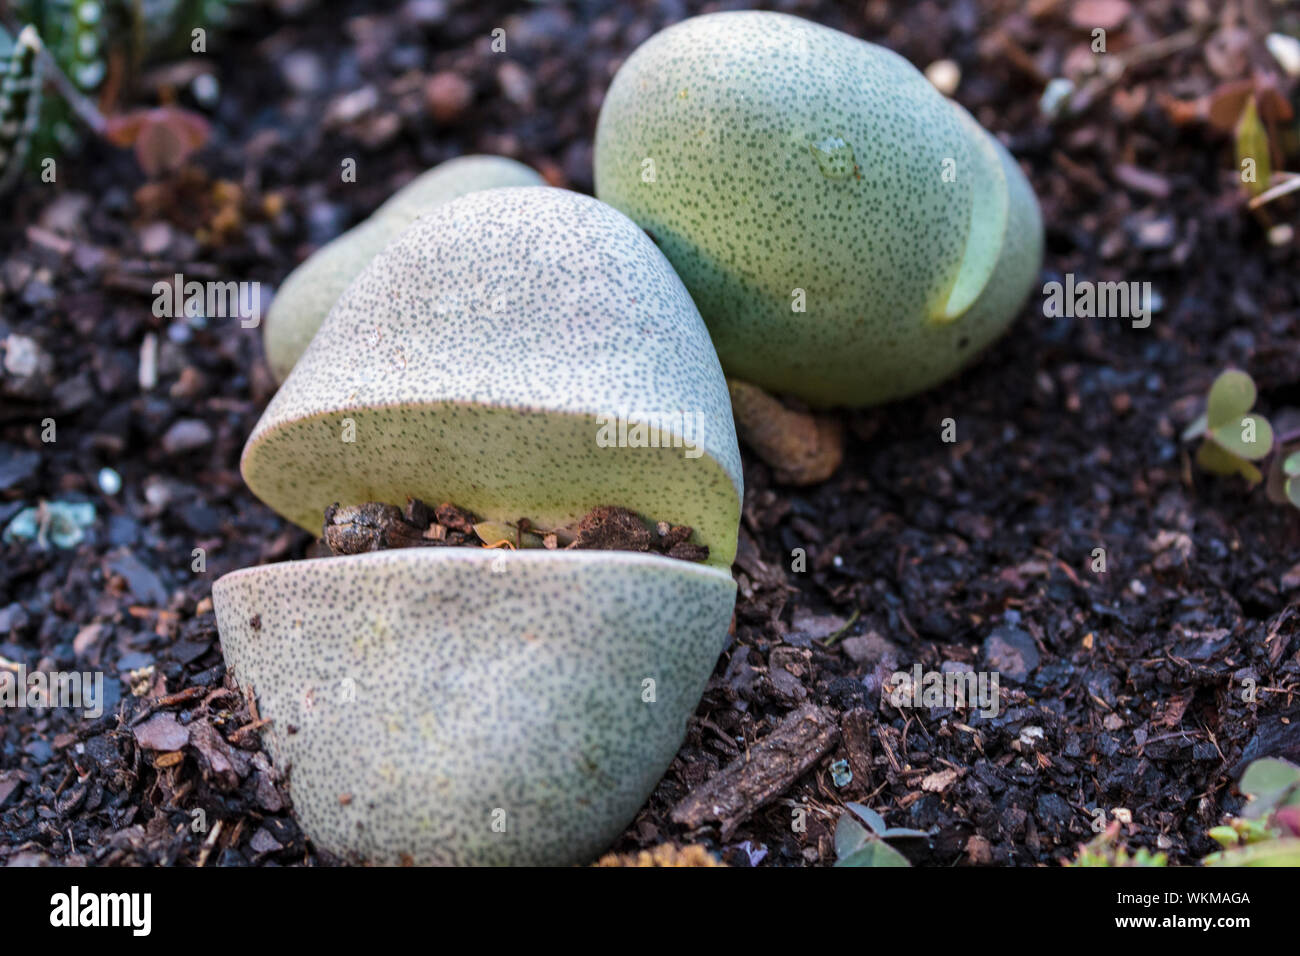 Split Rock (Pleiospilos nelii) plant Stock Photo - Alamy